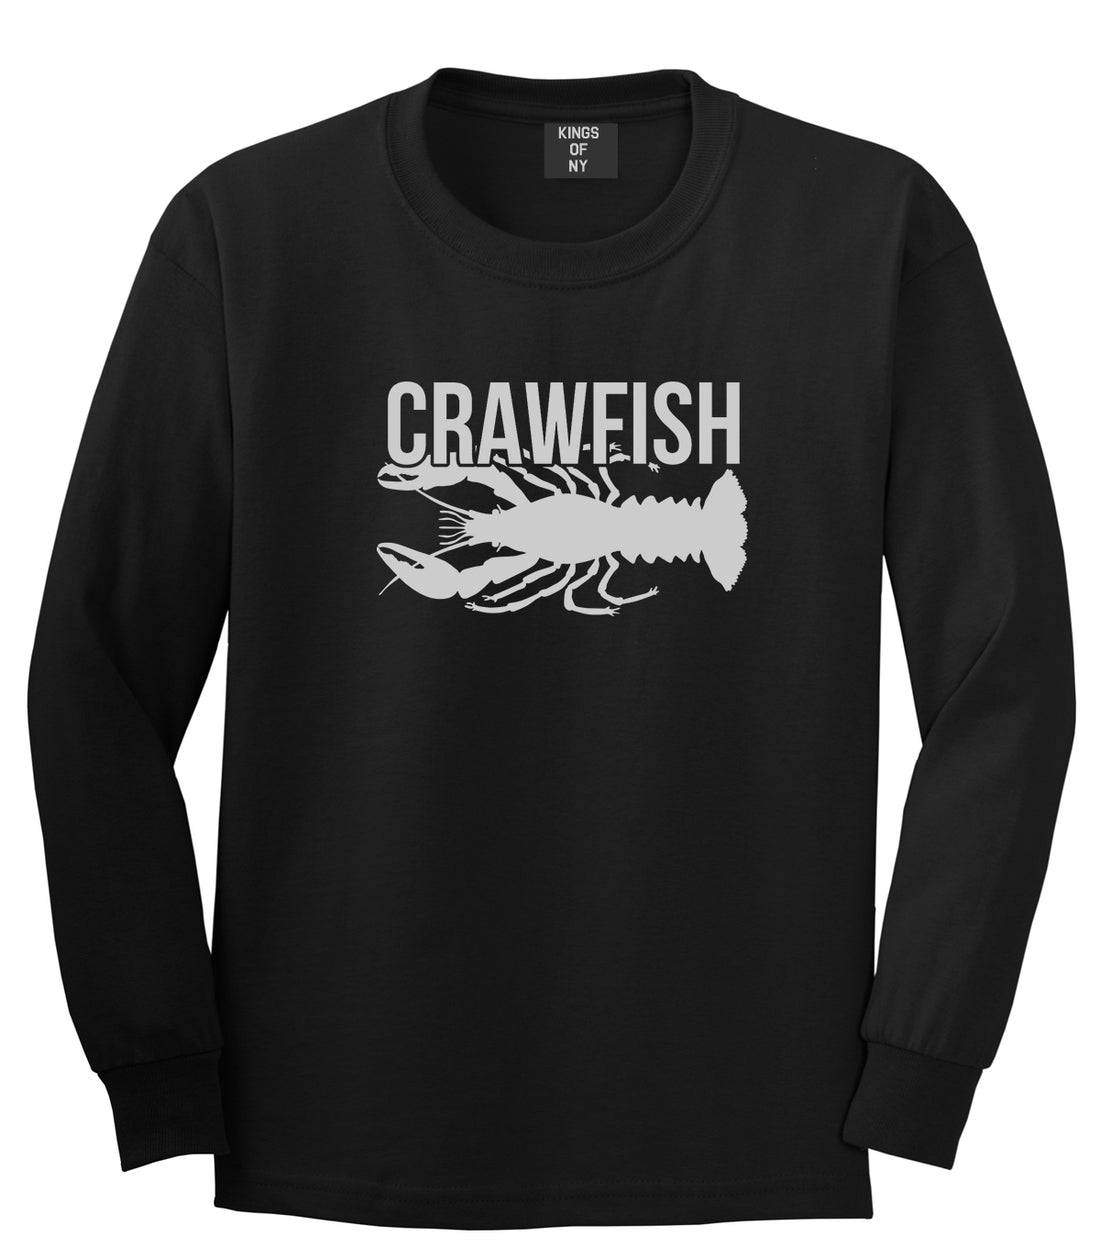 Crawfish Black Long Sleeve T-Shirt by Kings Of NY